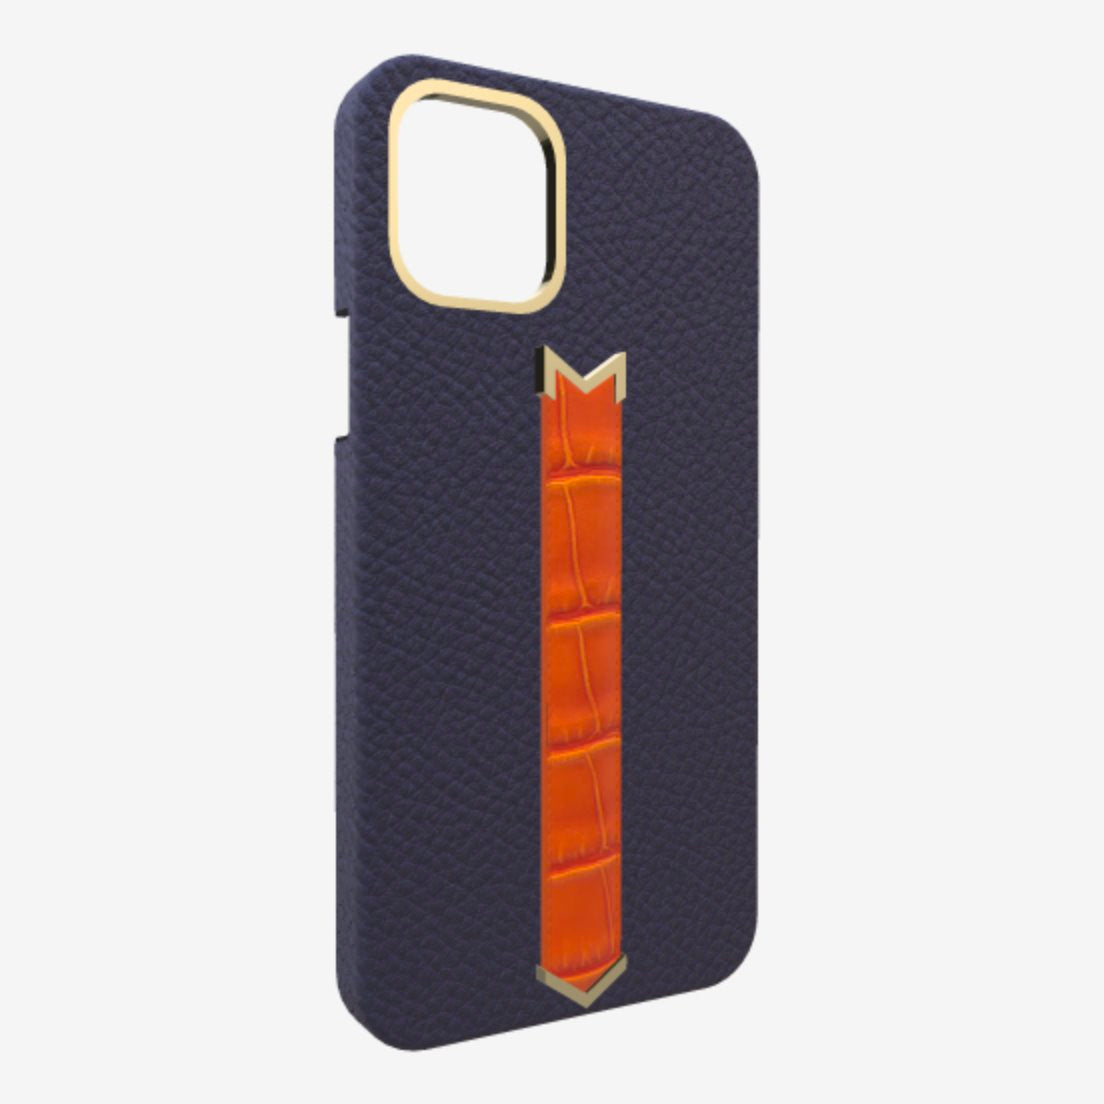 Gold Finger Strap Case for iPhone 13 Pro in Genuine Calfskin and Alligator Navy Blue Orange Cocktail 